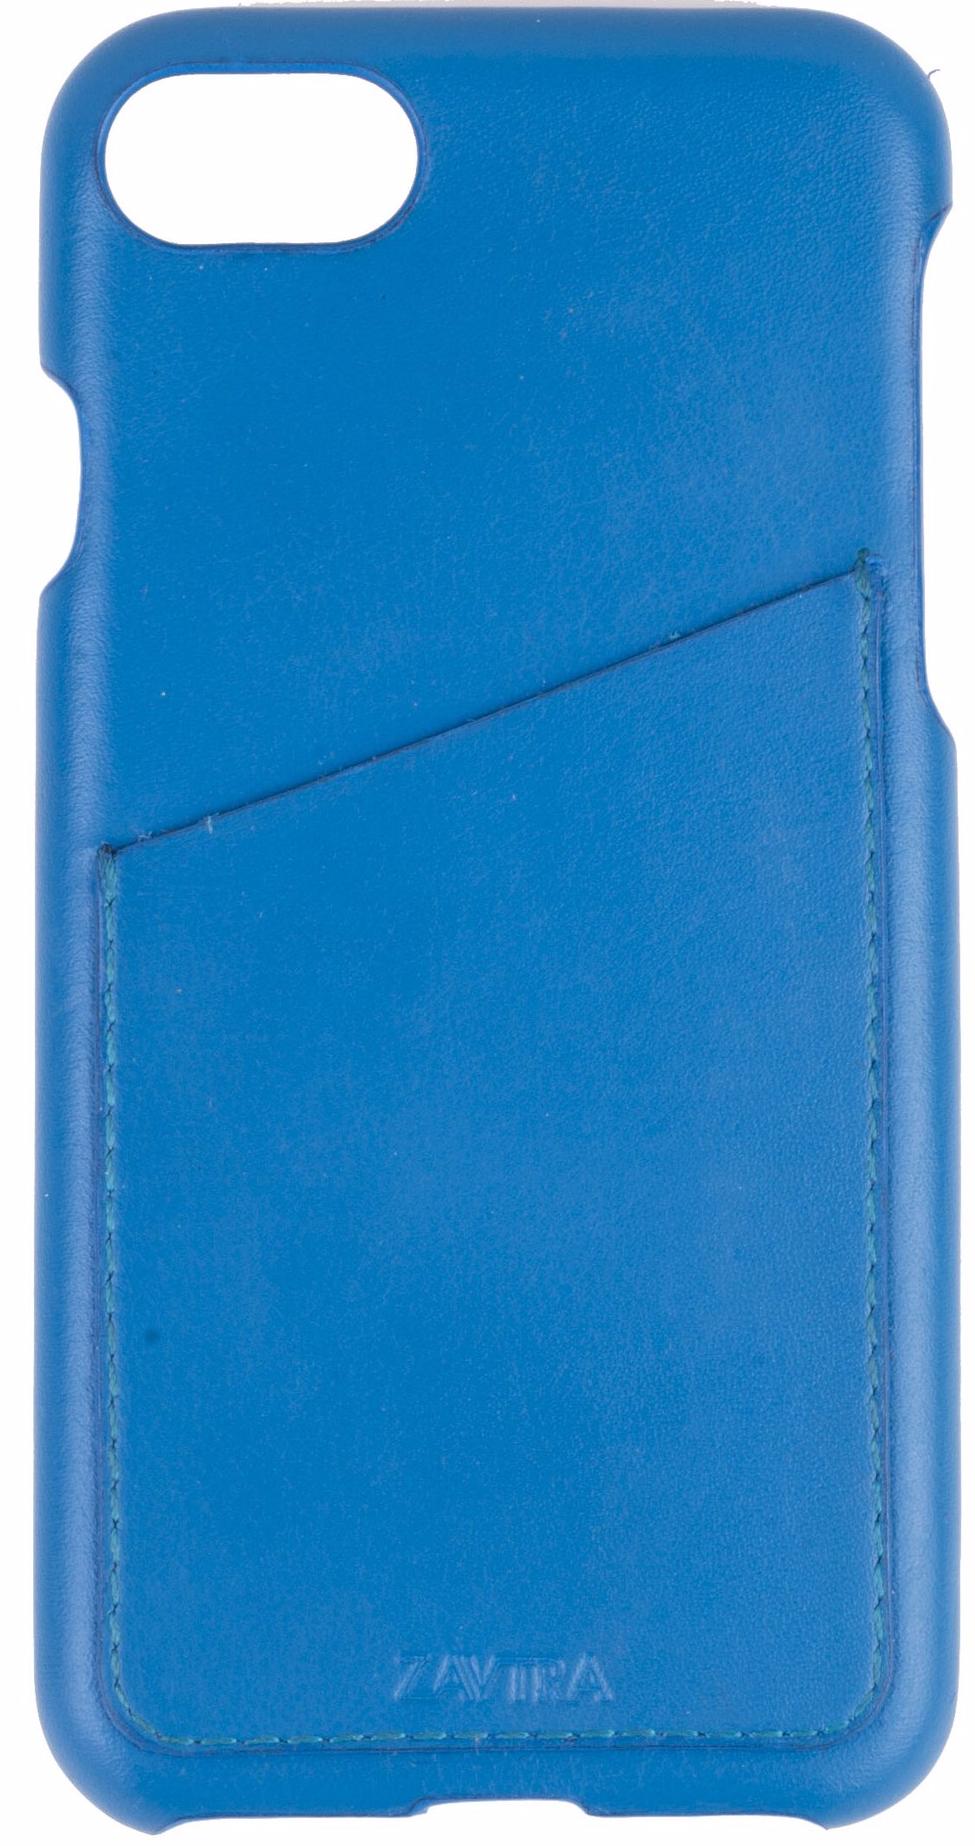 Zavtra Pocket Case - чехол для iPhone 7 (Blue)